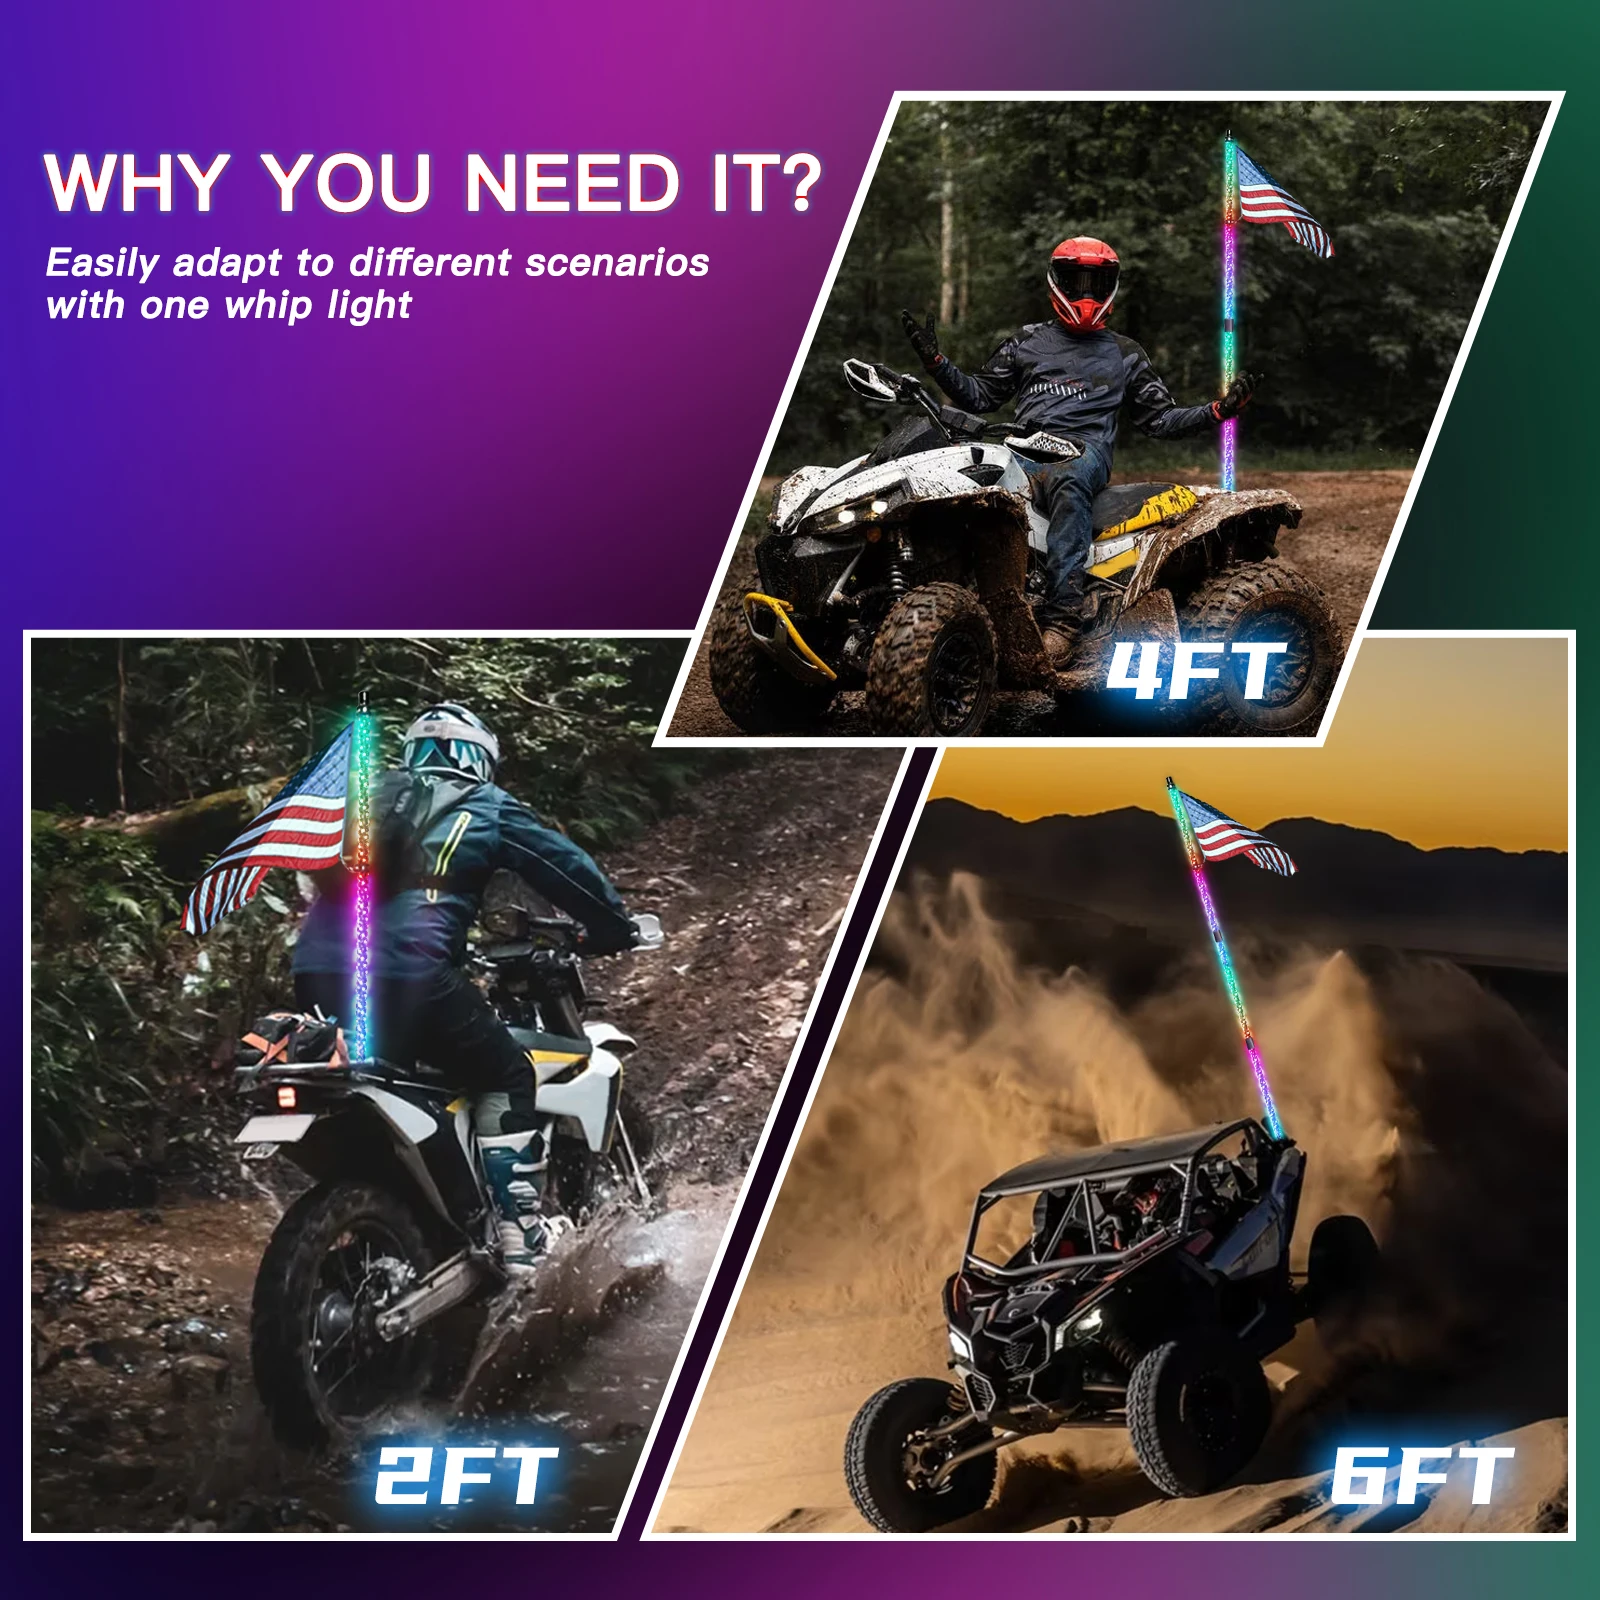 BEVINSEE 6FT LED RGB Whip Light Remote Control For ATV UTV Off-road Ve